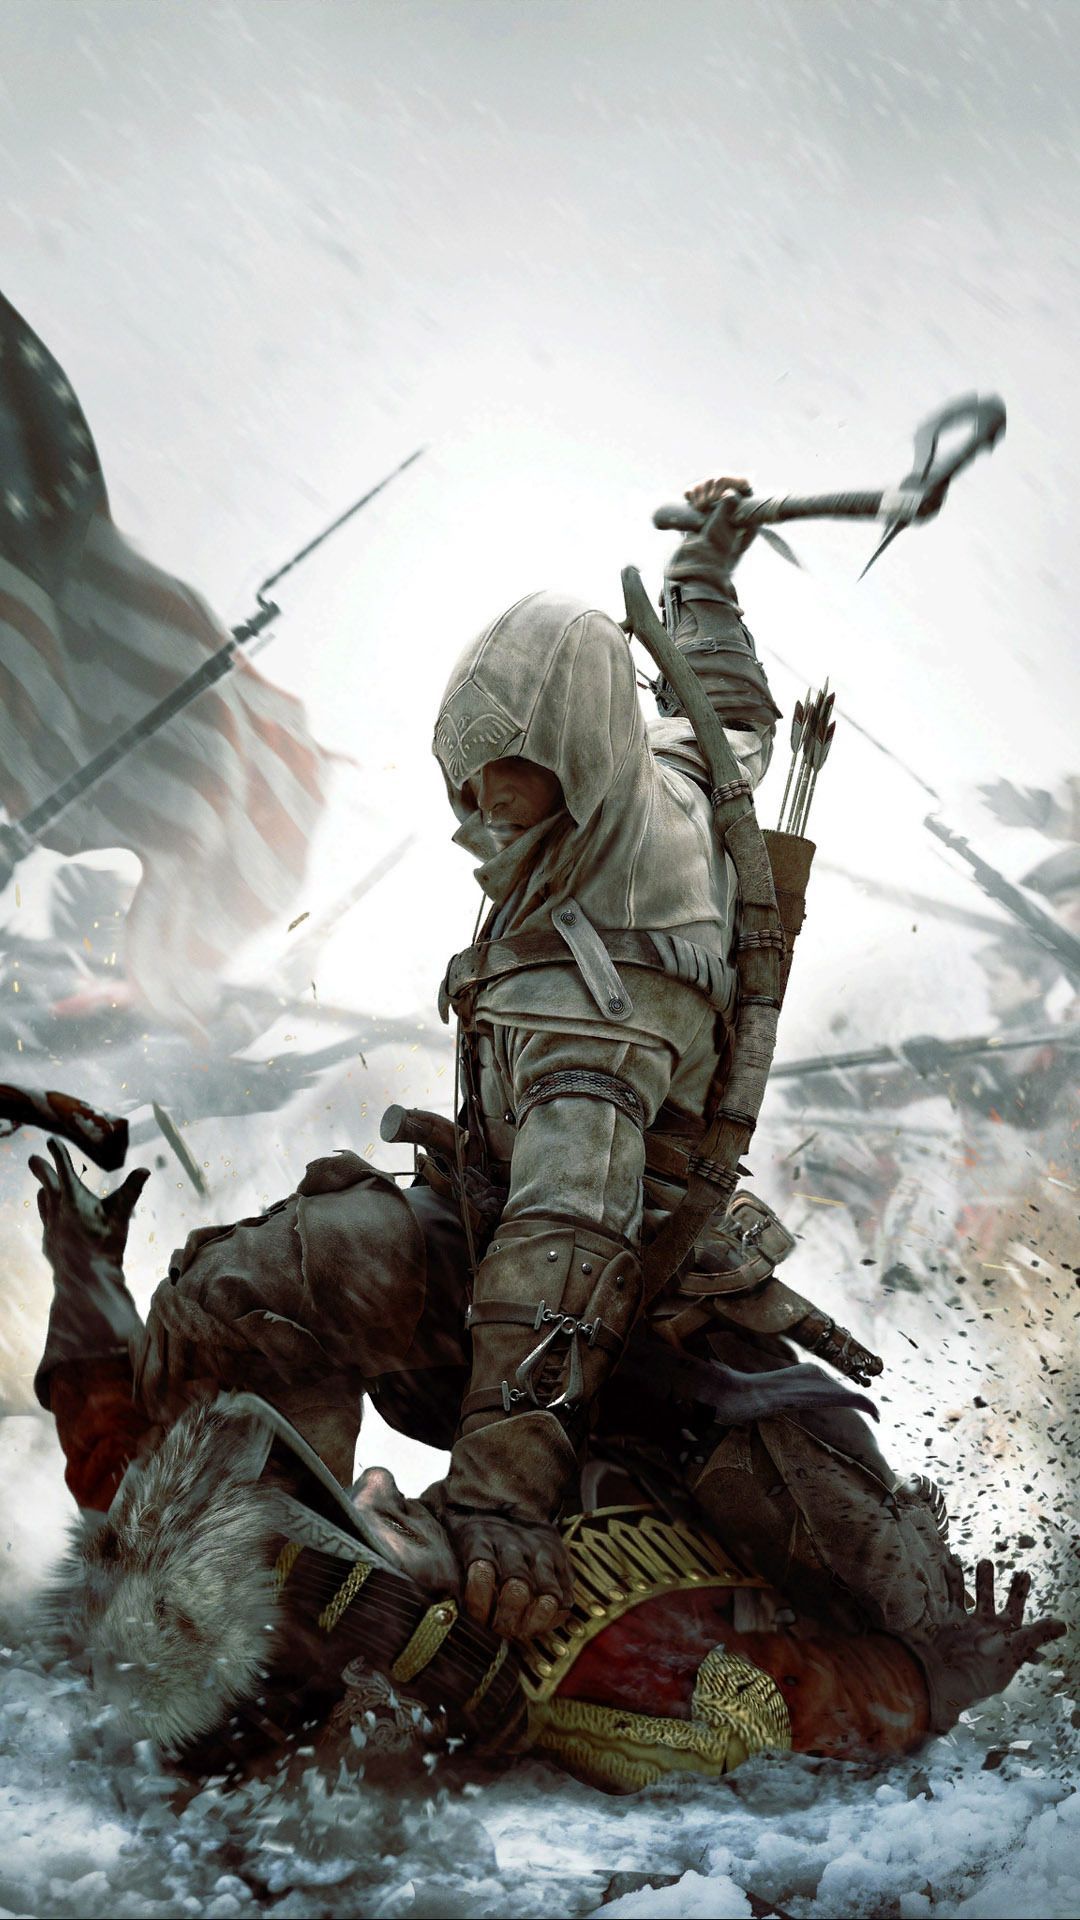 Connor Kenway's Creed III Mobile Wallpaper. Arte de